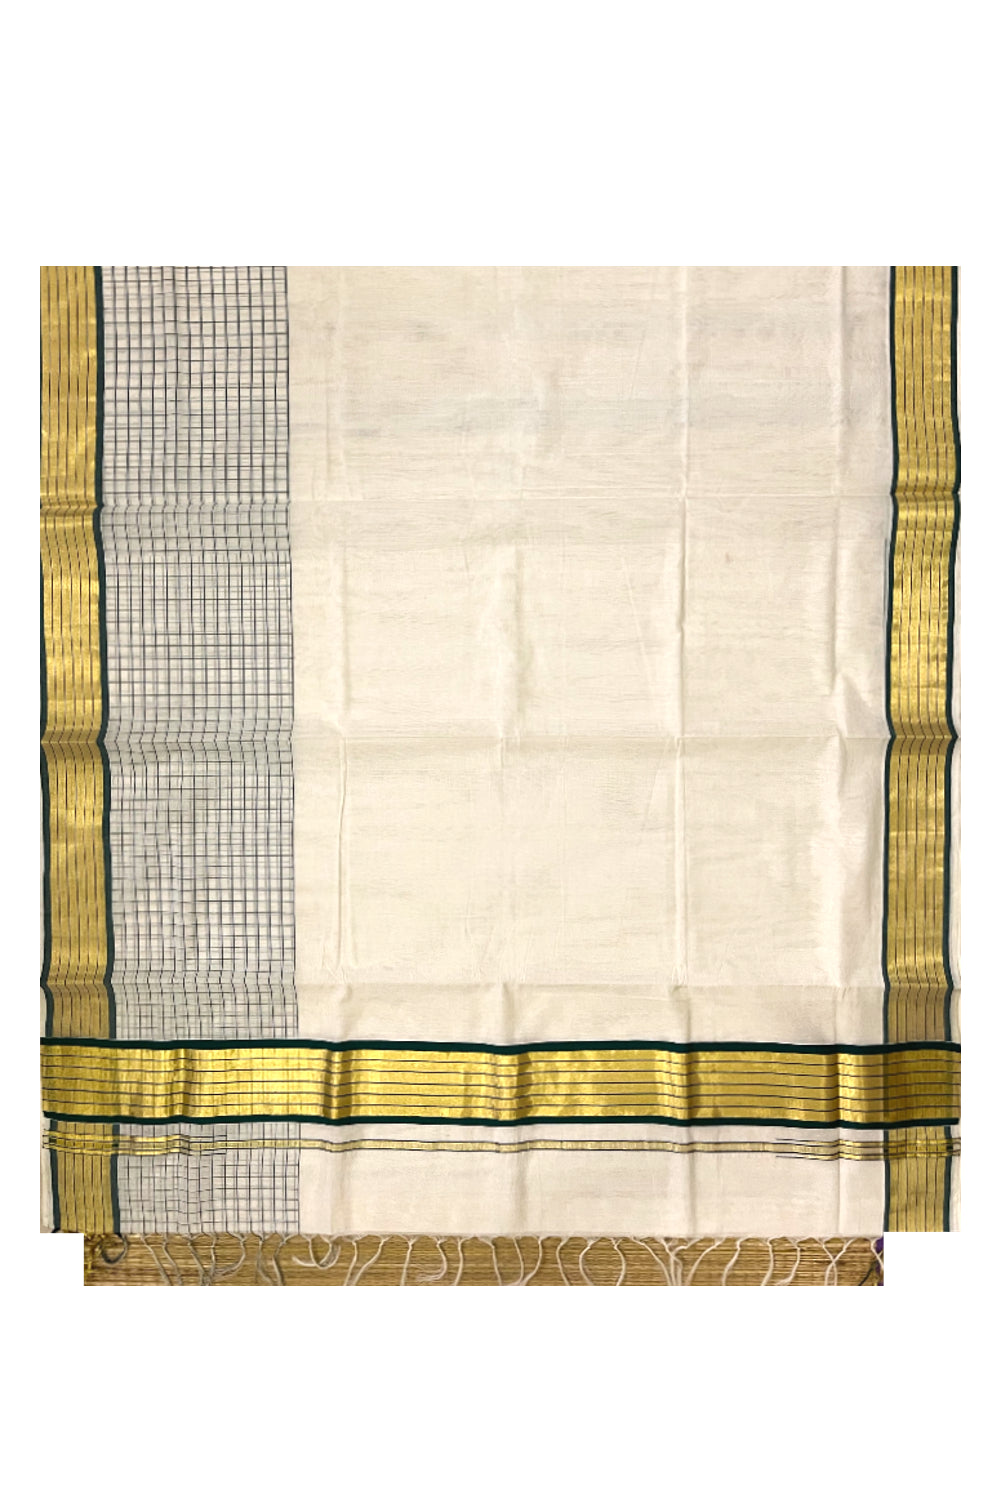 Southloom Premium Handloom Cotton Saree with Green and Kasavu Lines Border